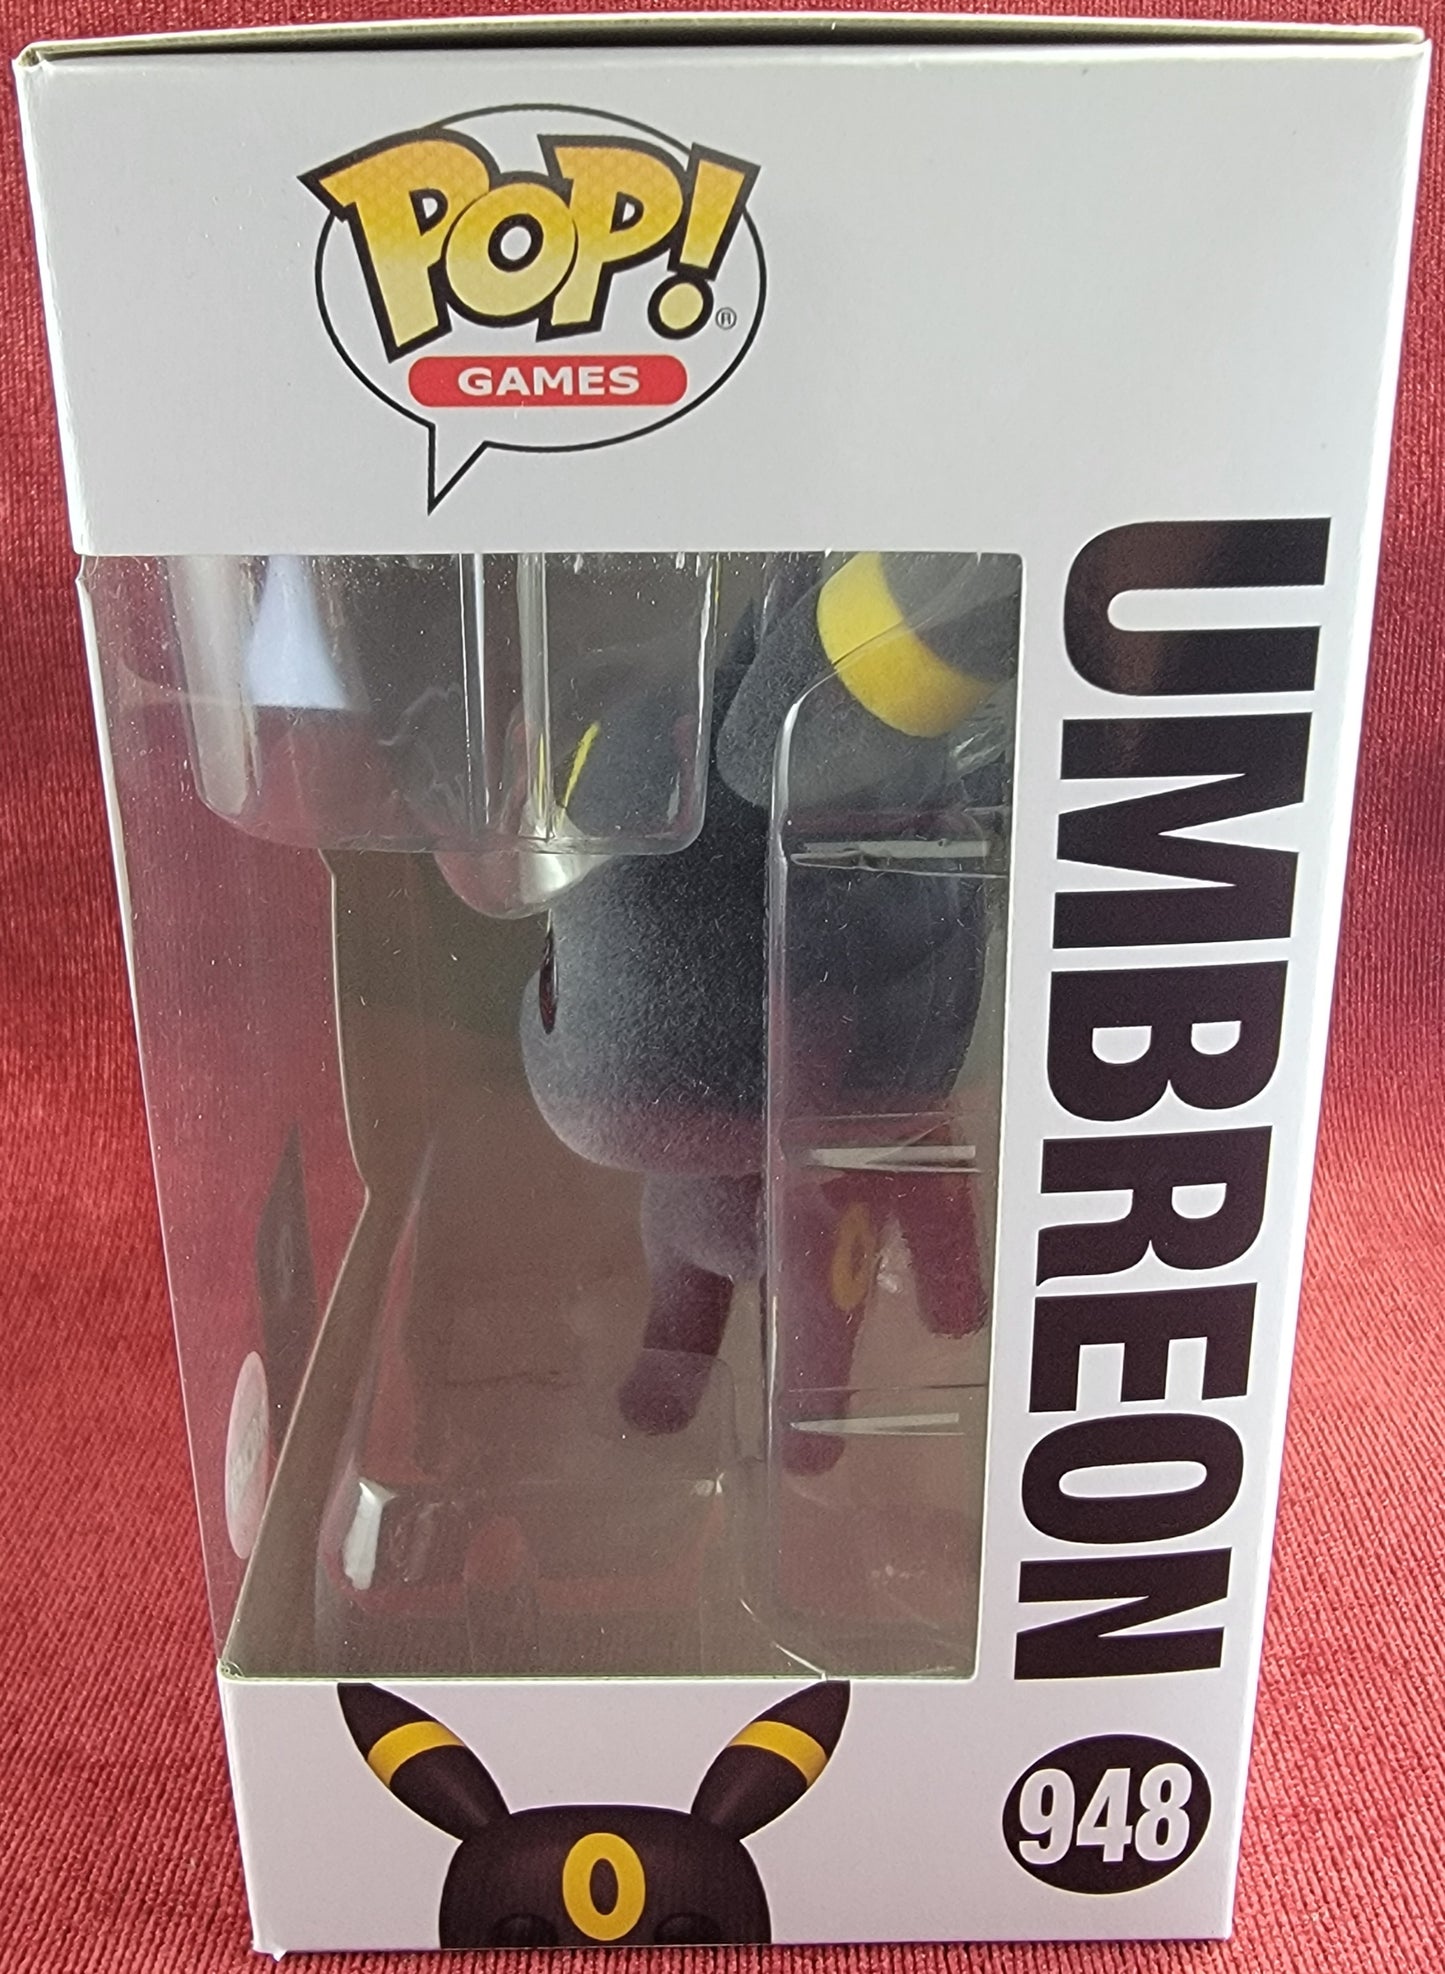 Umbreon chalice exclusive funko # 948 (nib)
With pop protector